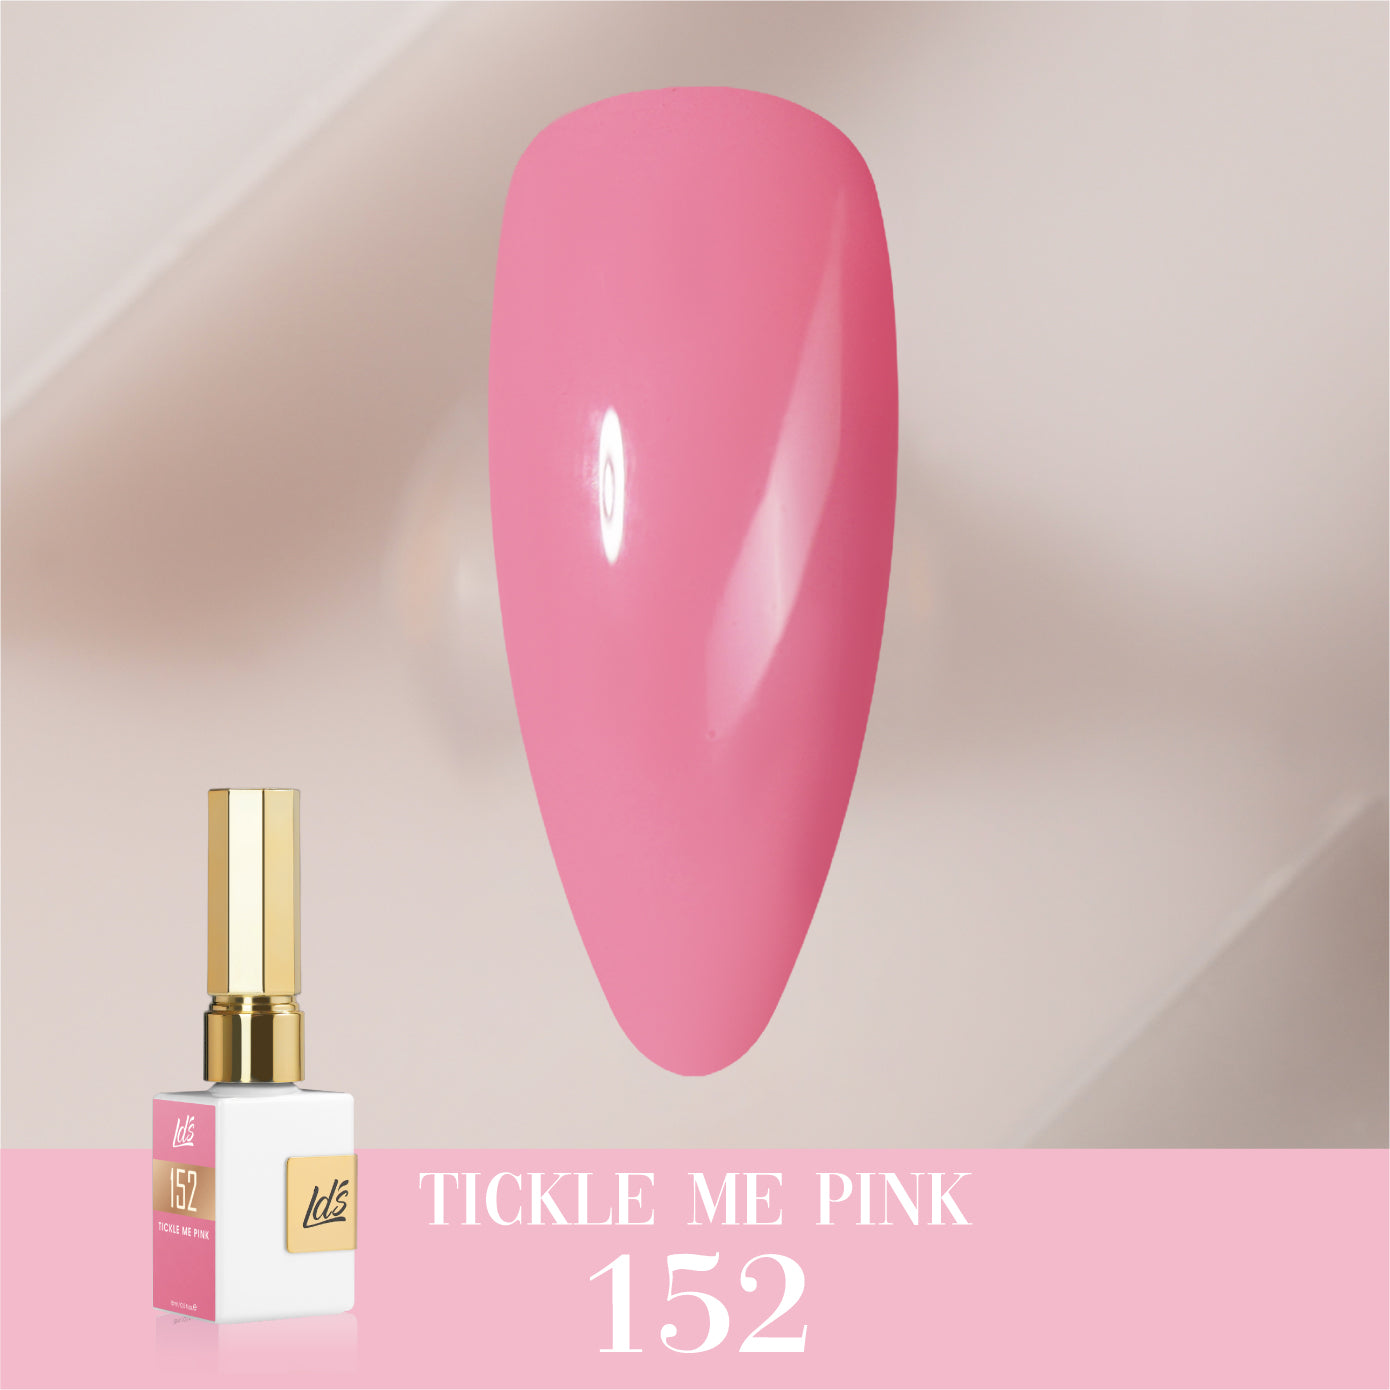 LDS Color Craze Collection - 152 Tickle Me Pink - Gel Polish 0.5oz